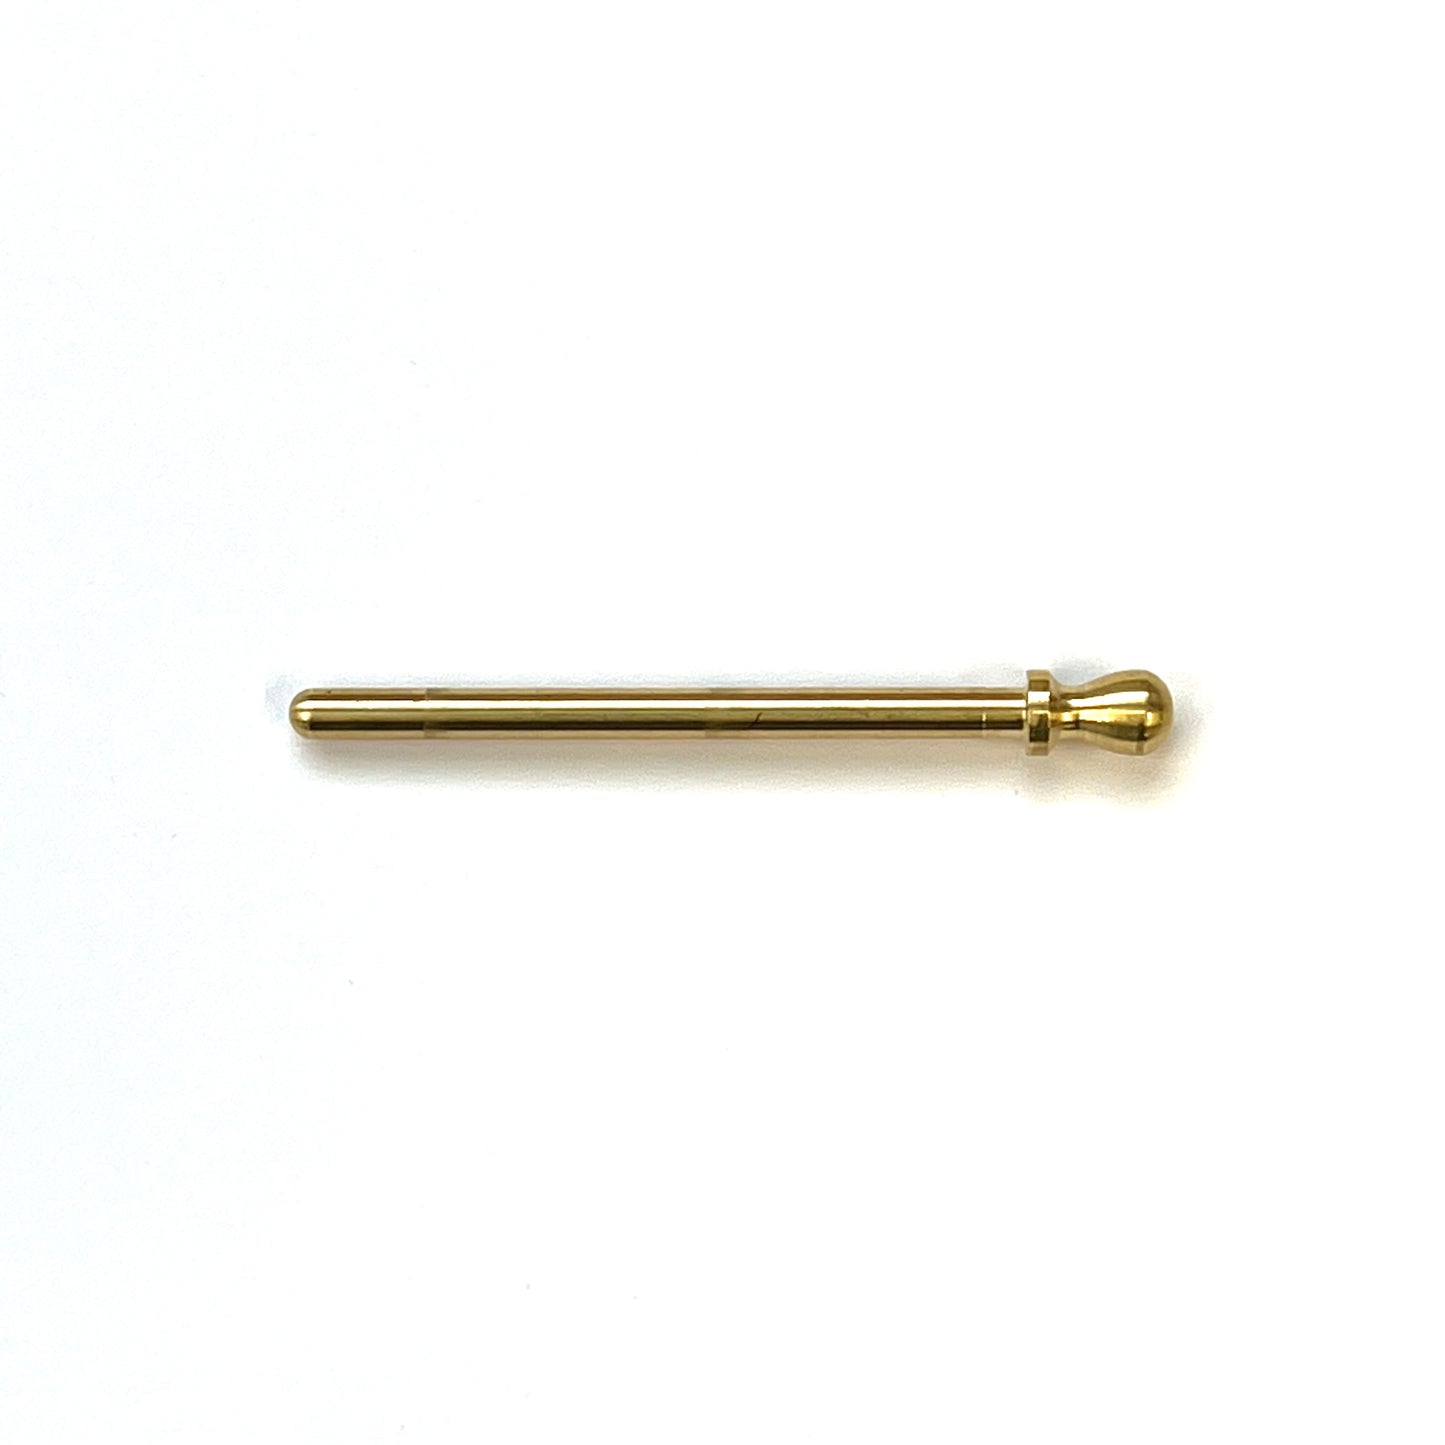 Steinway style hinge pin ball tip